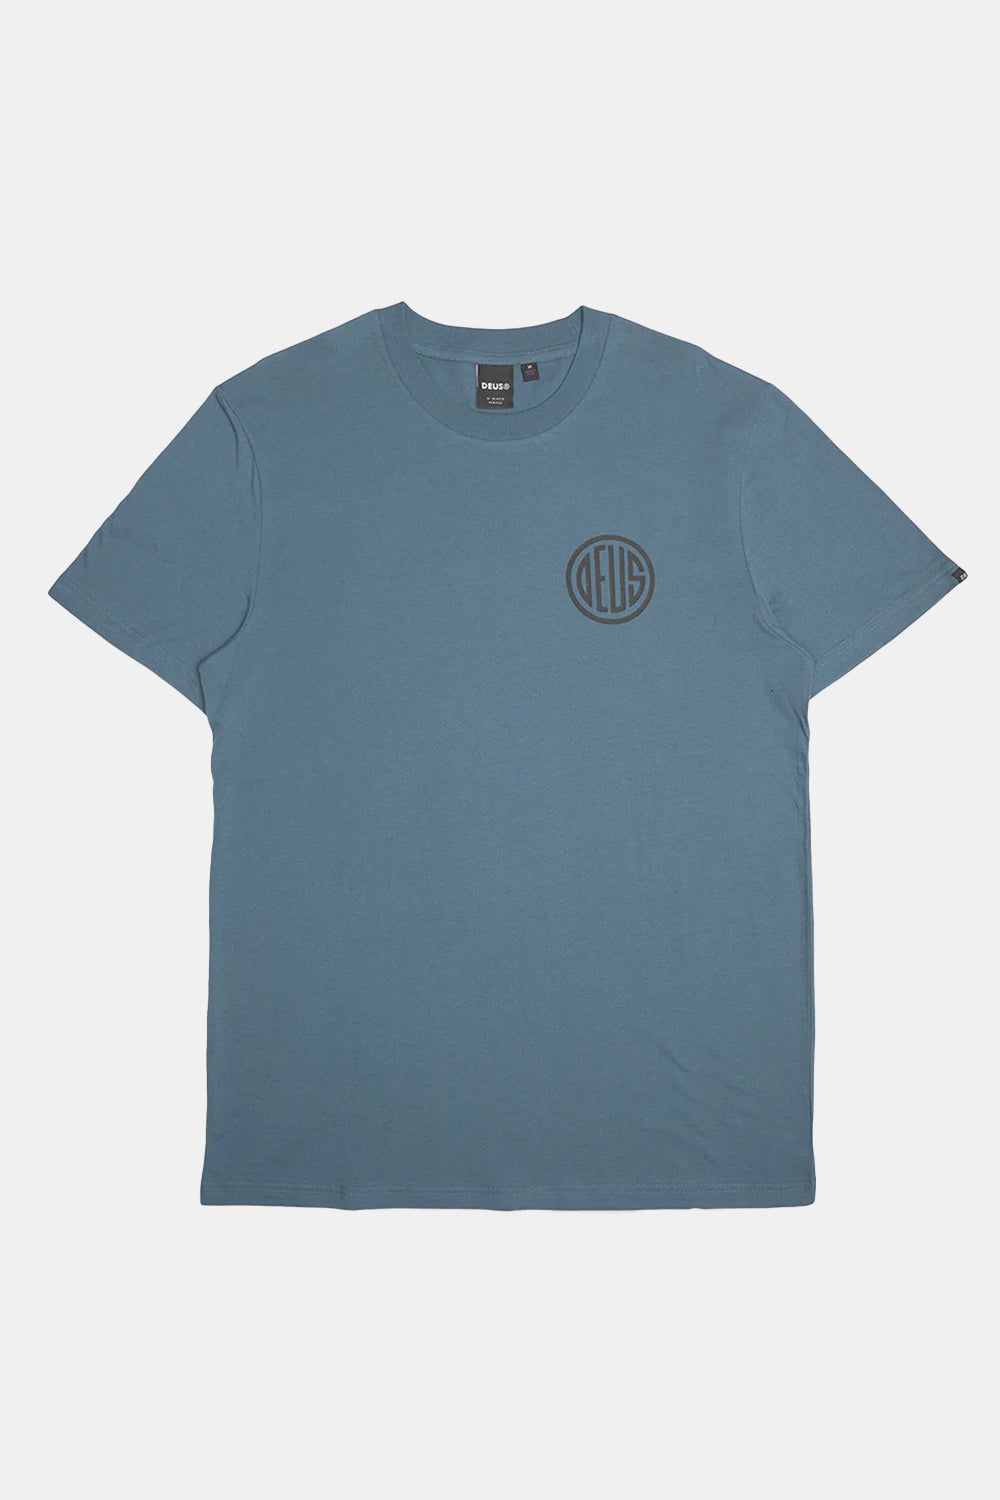 Deus Clutch T-shirt (Smokey Blue)